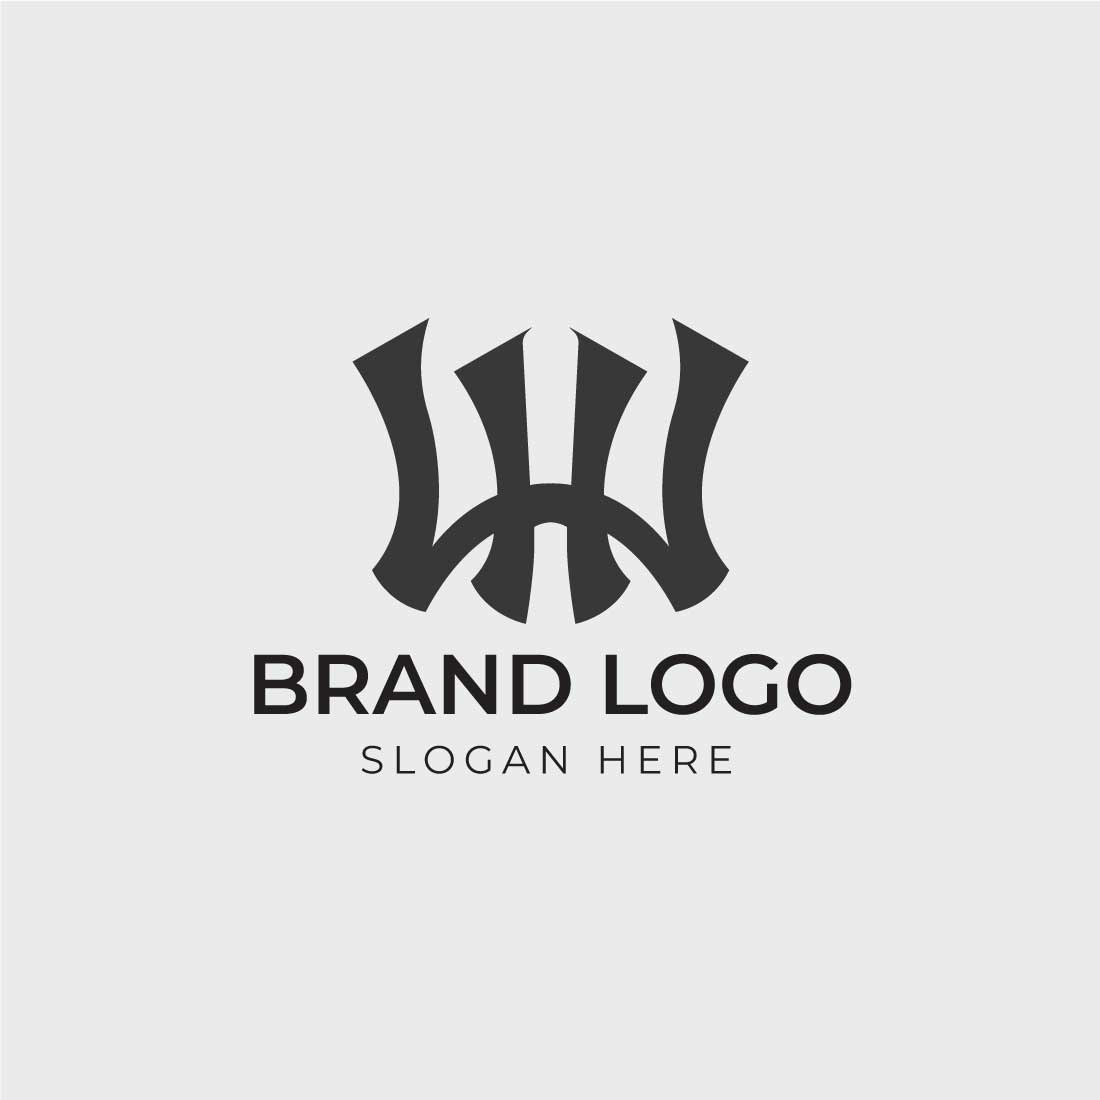 WH logo letter design concept cover image.